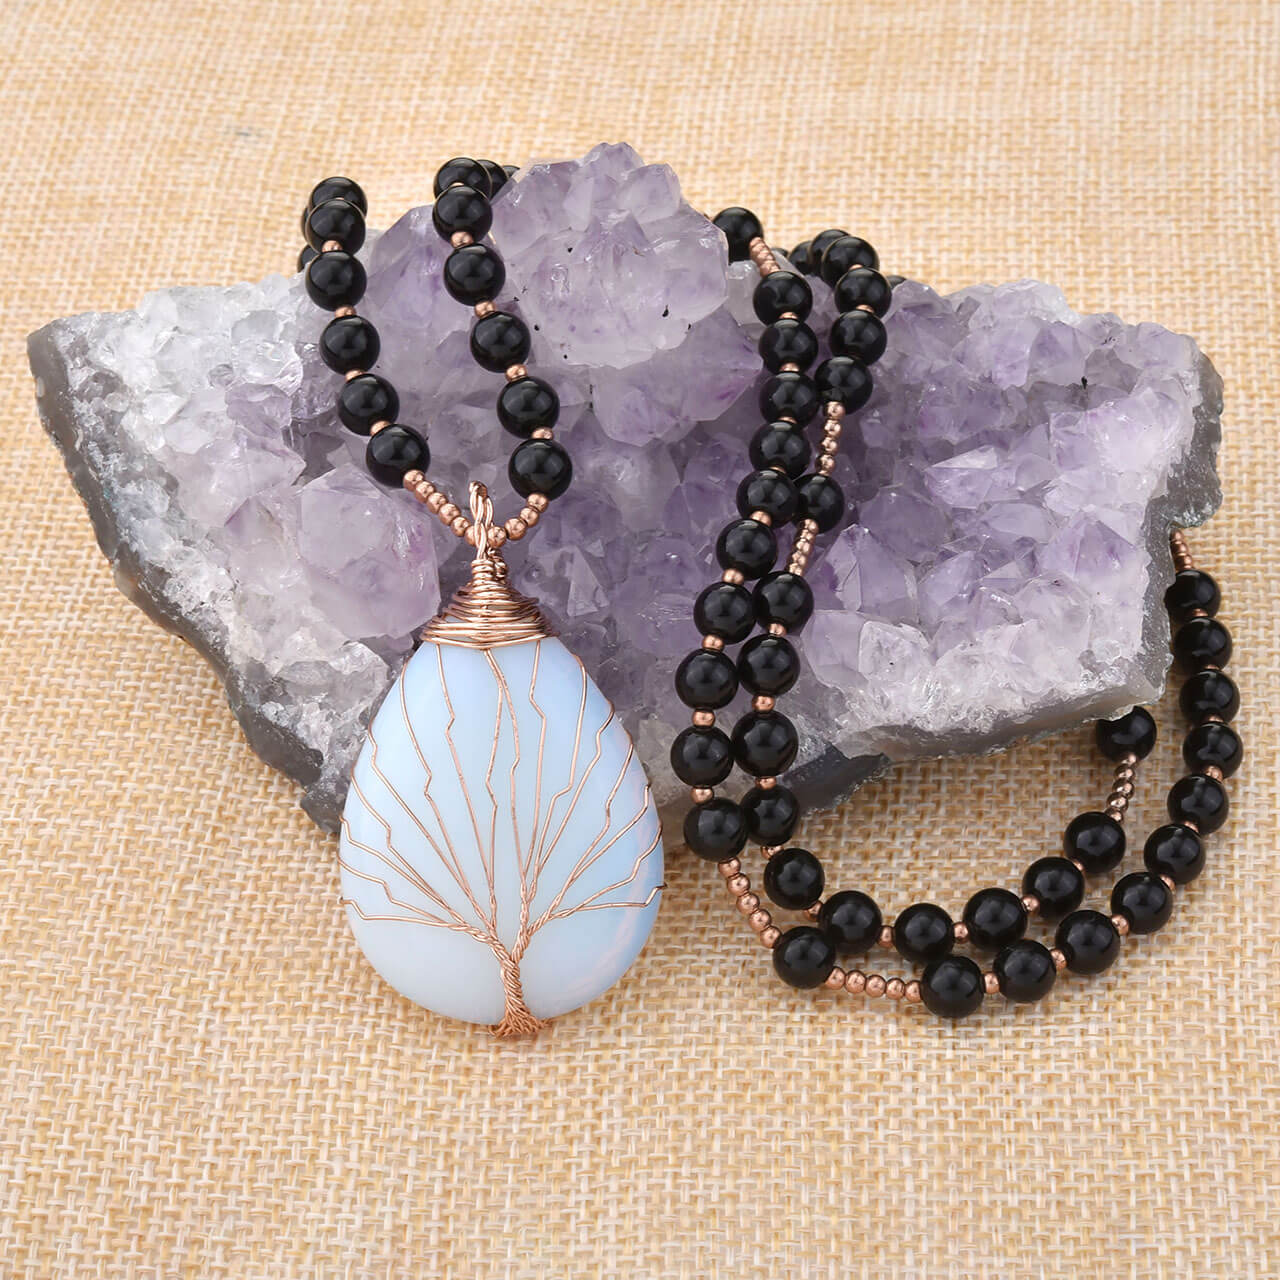 Jovivi healing reiki opalite tree of life necklace for women birthday gift